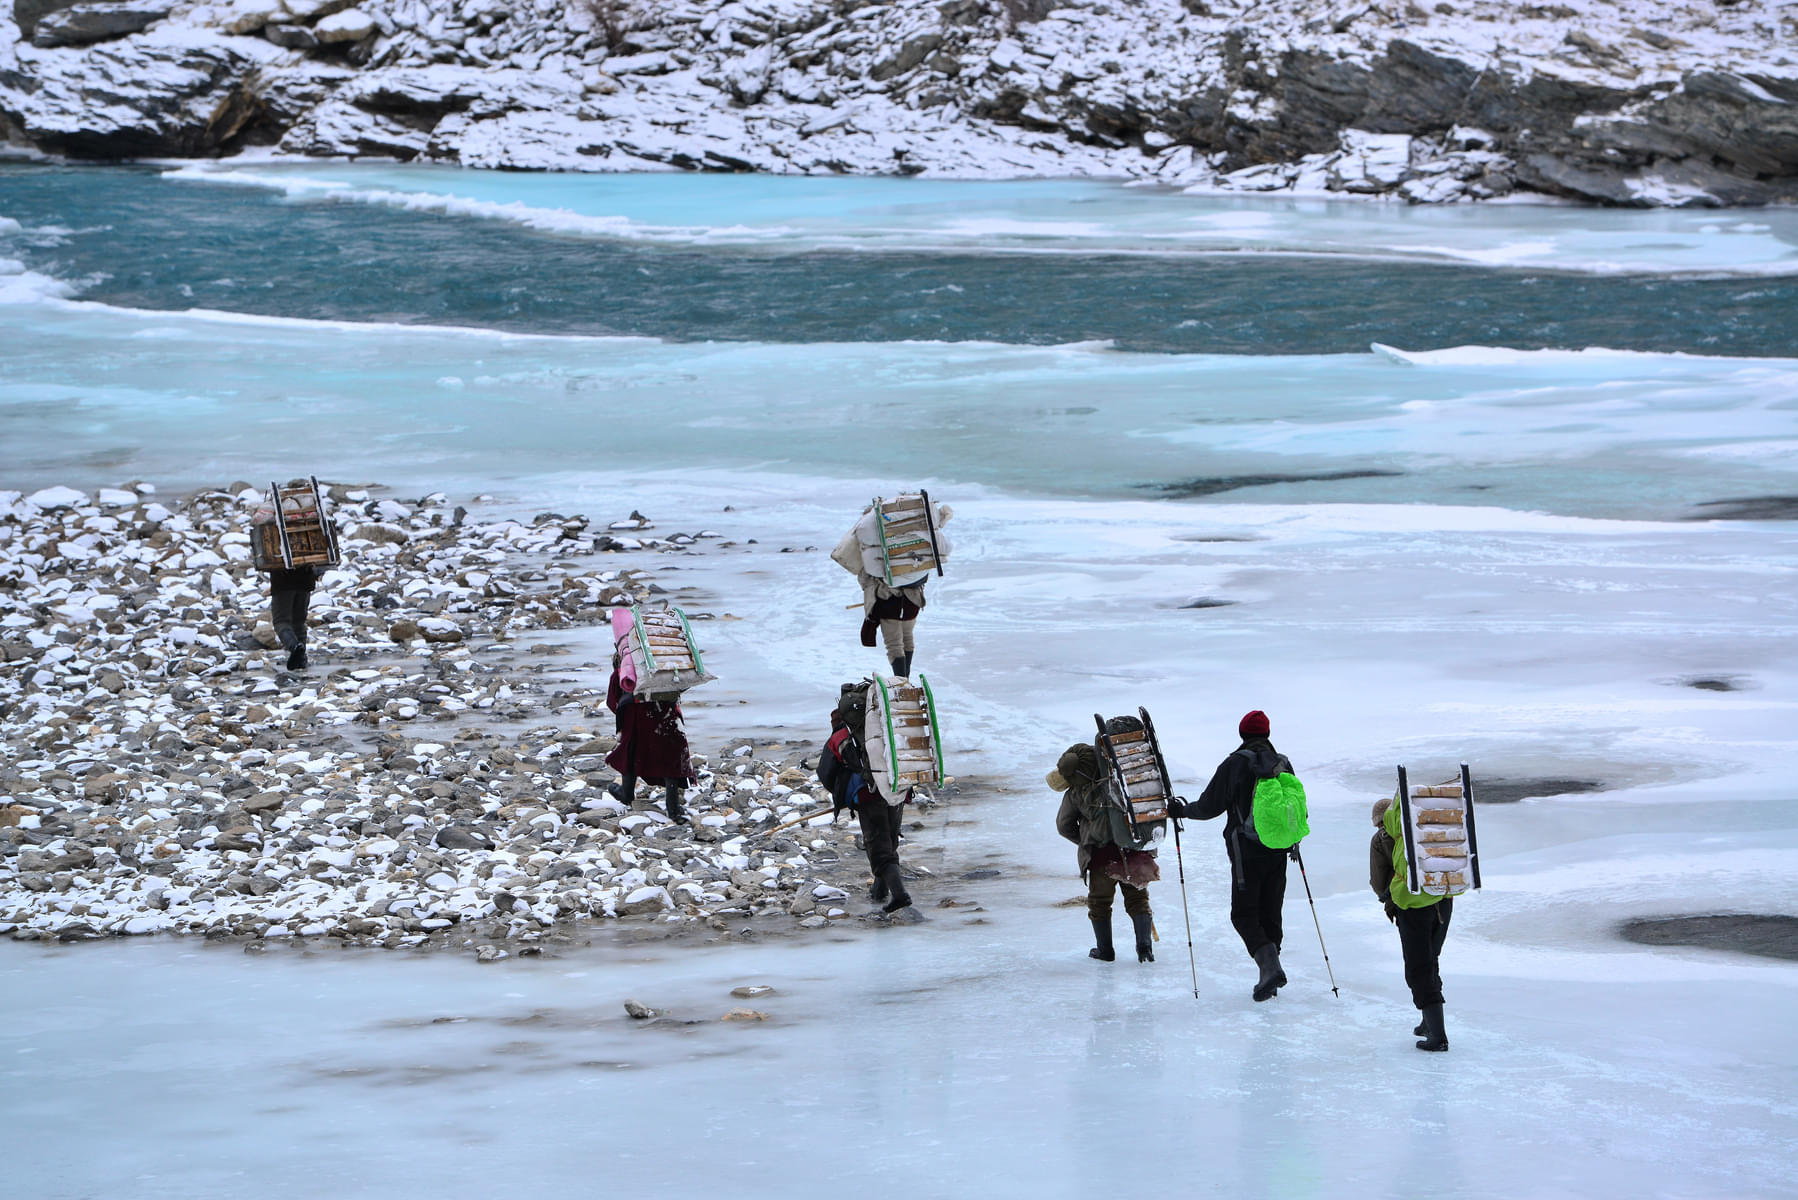 Discover the untamed beauty of the frozen Zanskar river